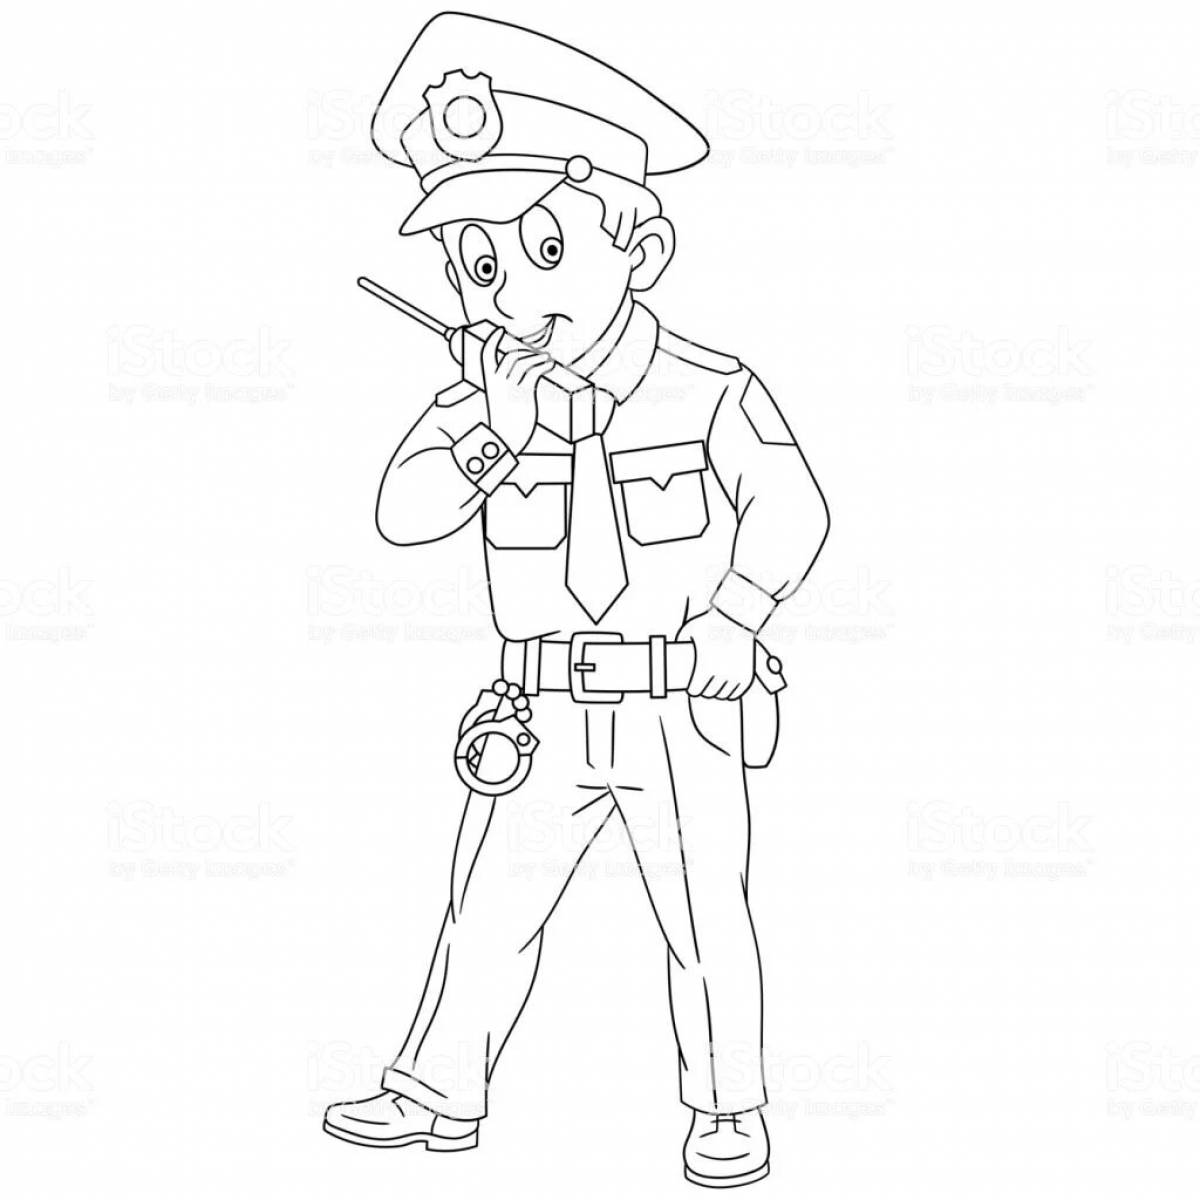 Comic police russian coloring book